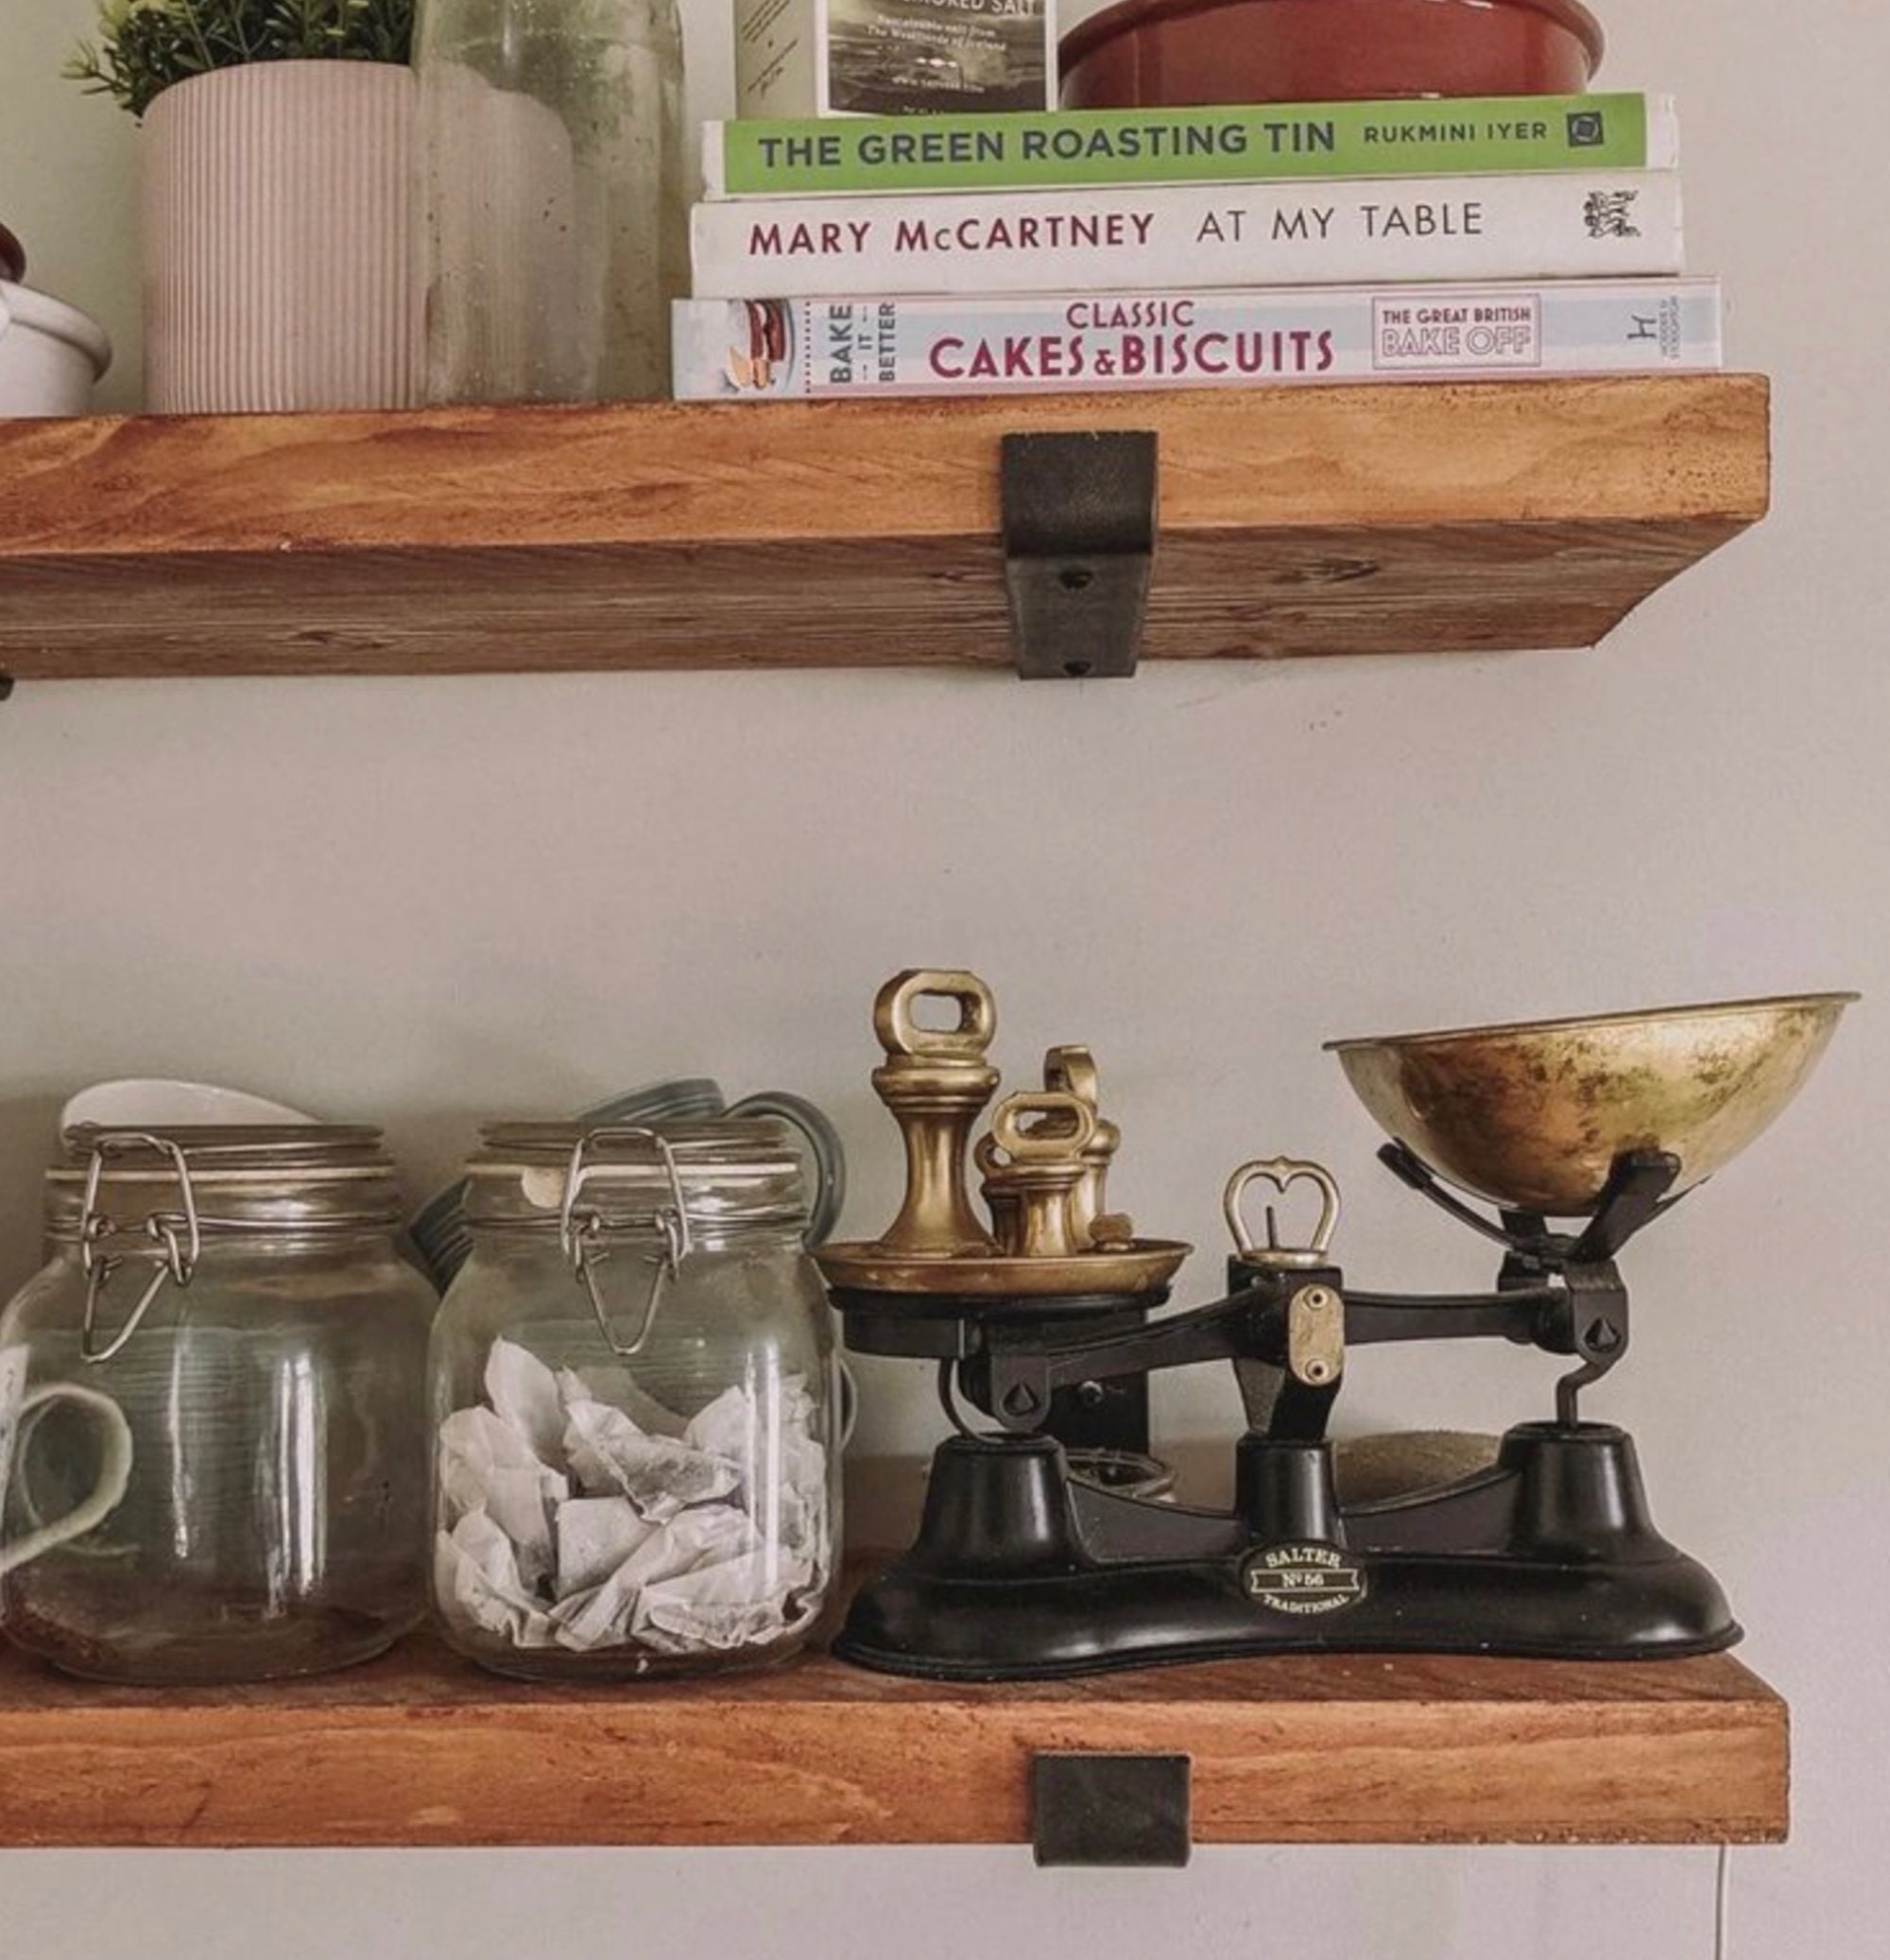 Wood Shelf, Floating Shelf, Wood Shelf, Wooden Shelf, Modern Farmhouse,  Shelf, Home Organization, Shelving, Wooden Hanging Shelves — Hurd & Honey